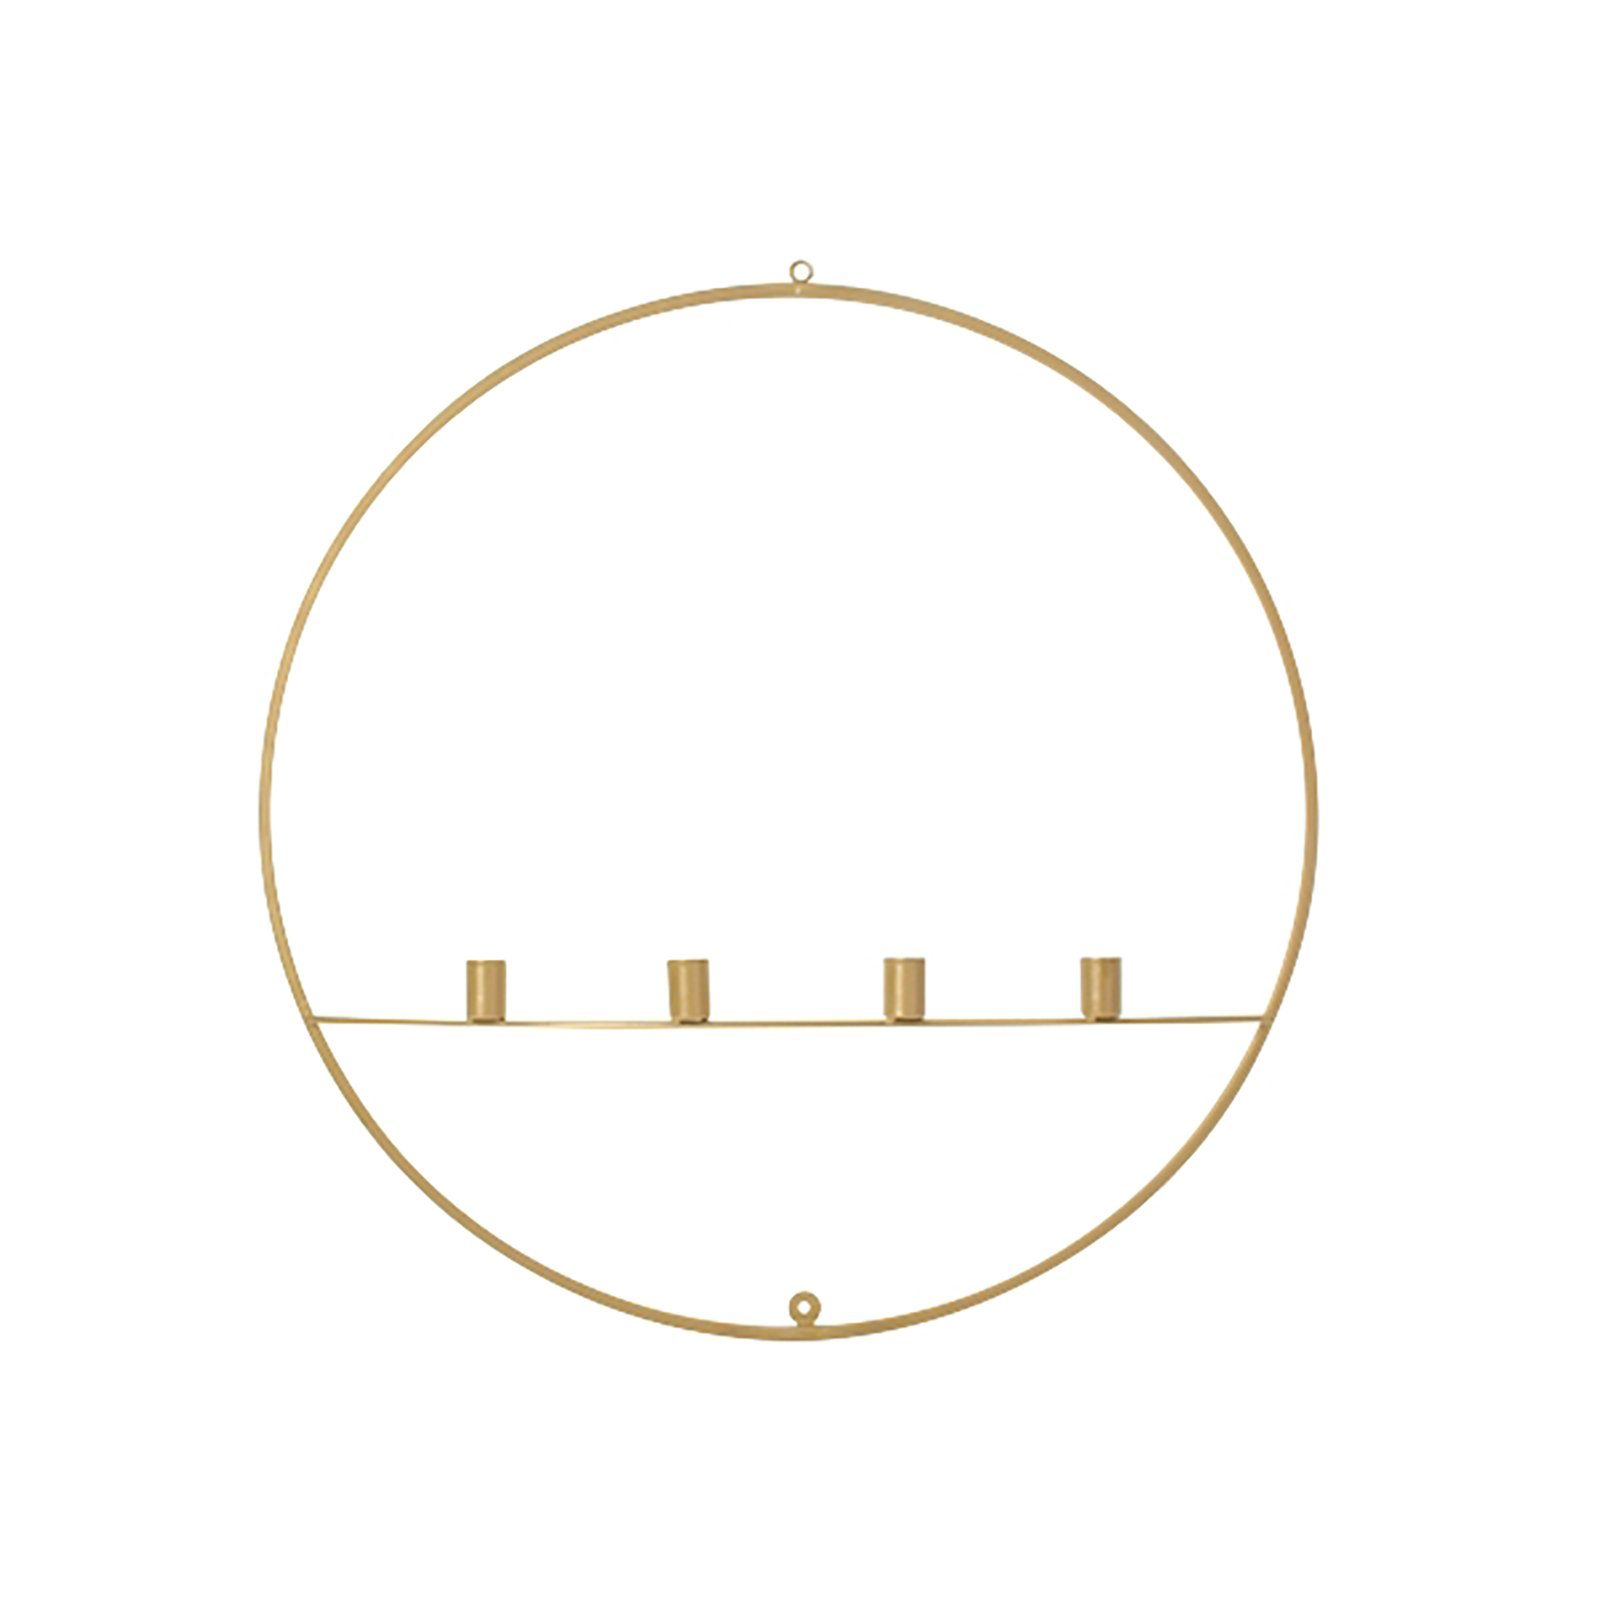 Voß Kerzenhalter Werner Circle, Kerzenleuchter gold, Metall cm Wandbefestigung, - Durchmesser 60